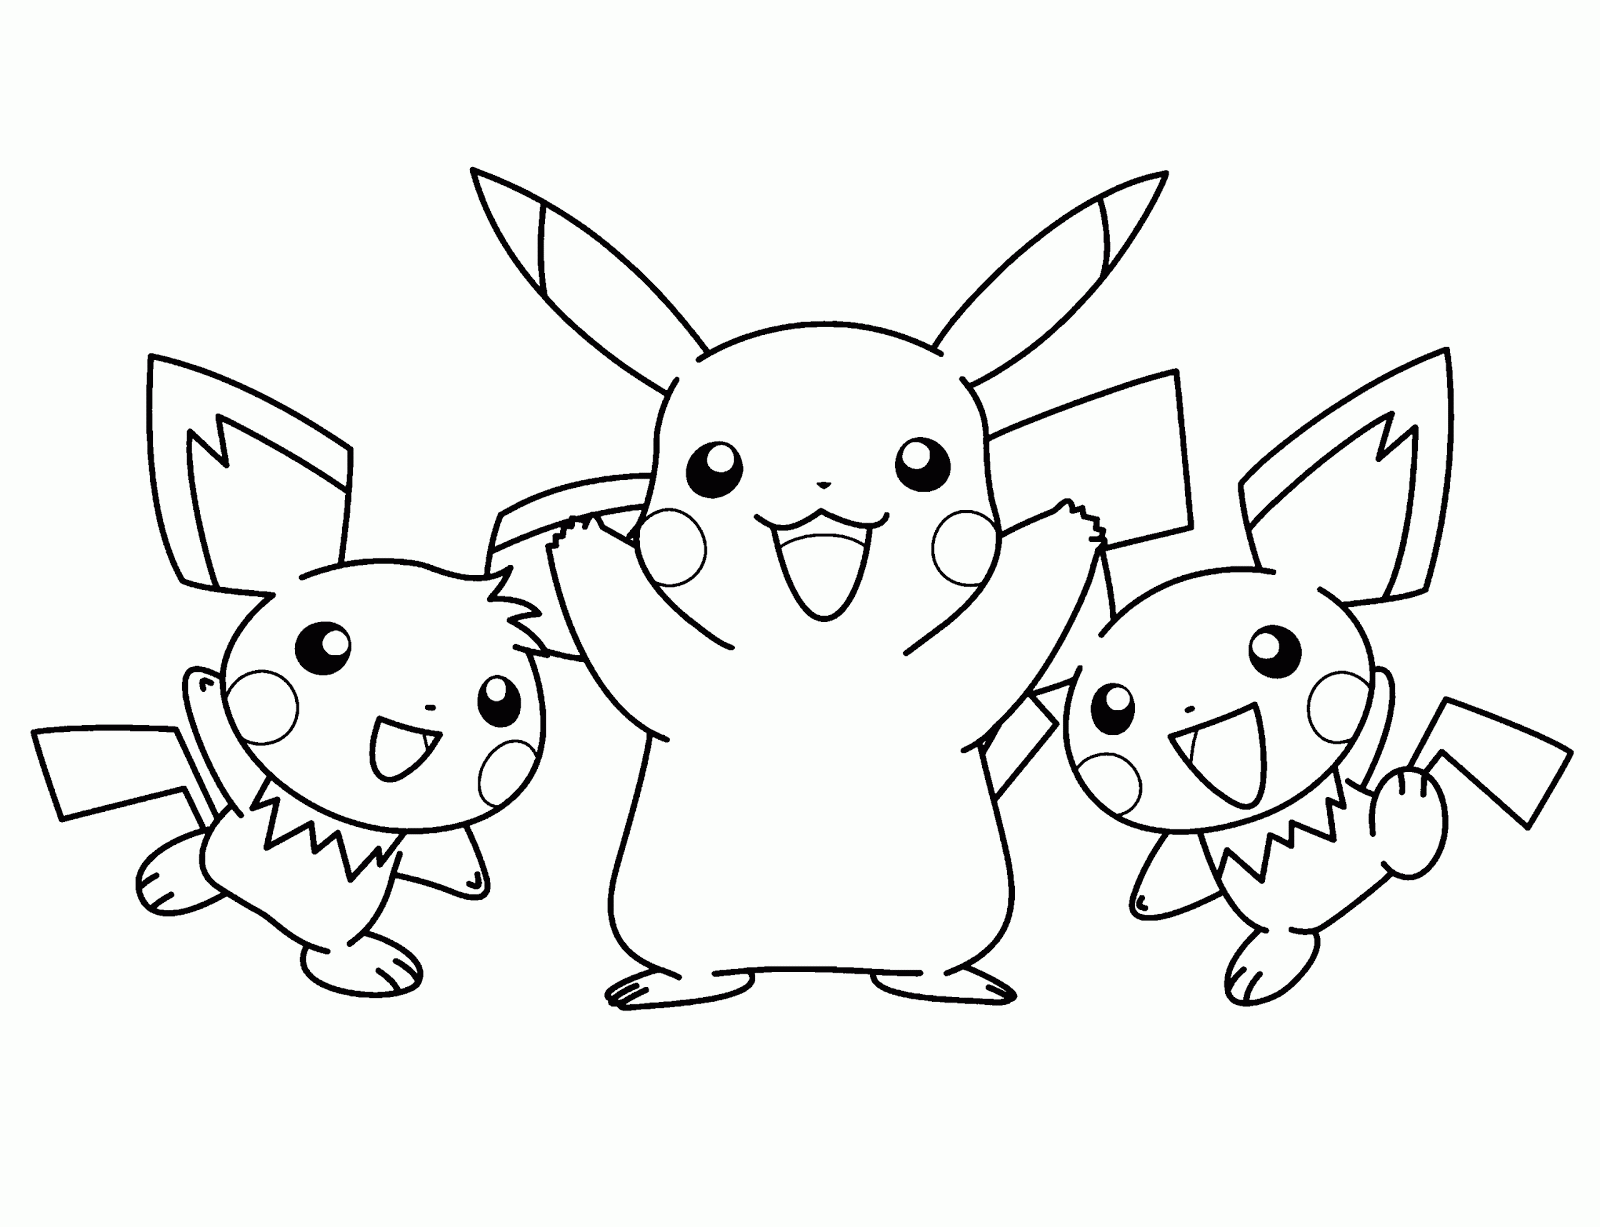 Coloriage pikachu gratuit - dessin a imprimer #5